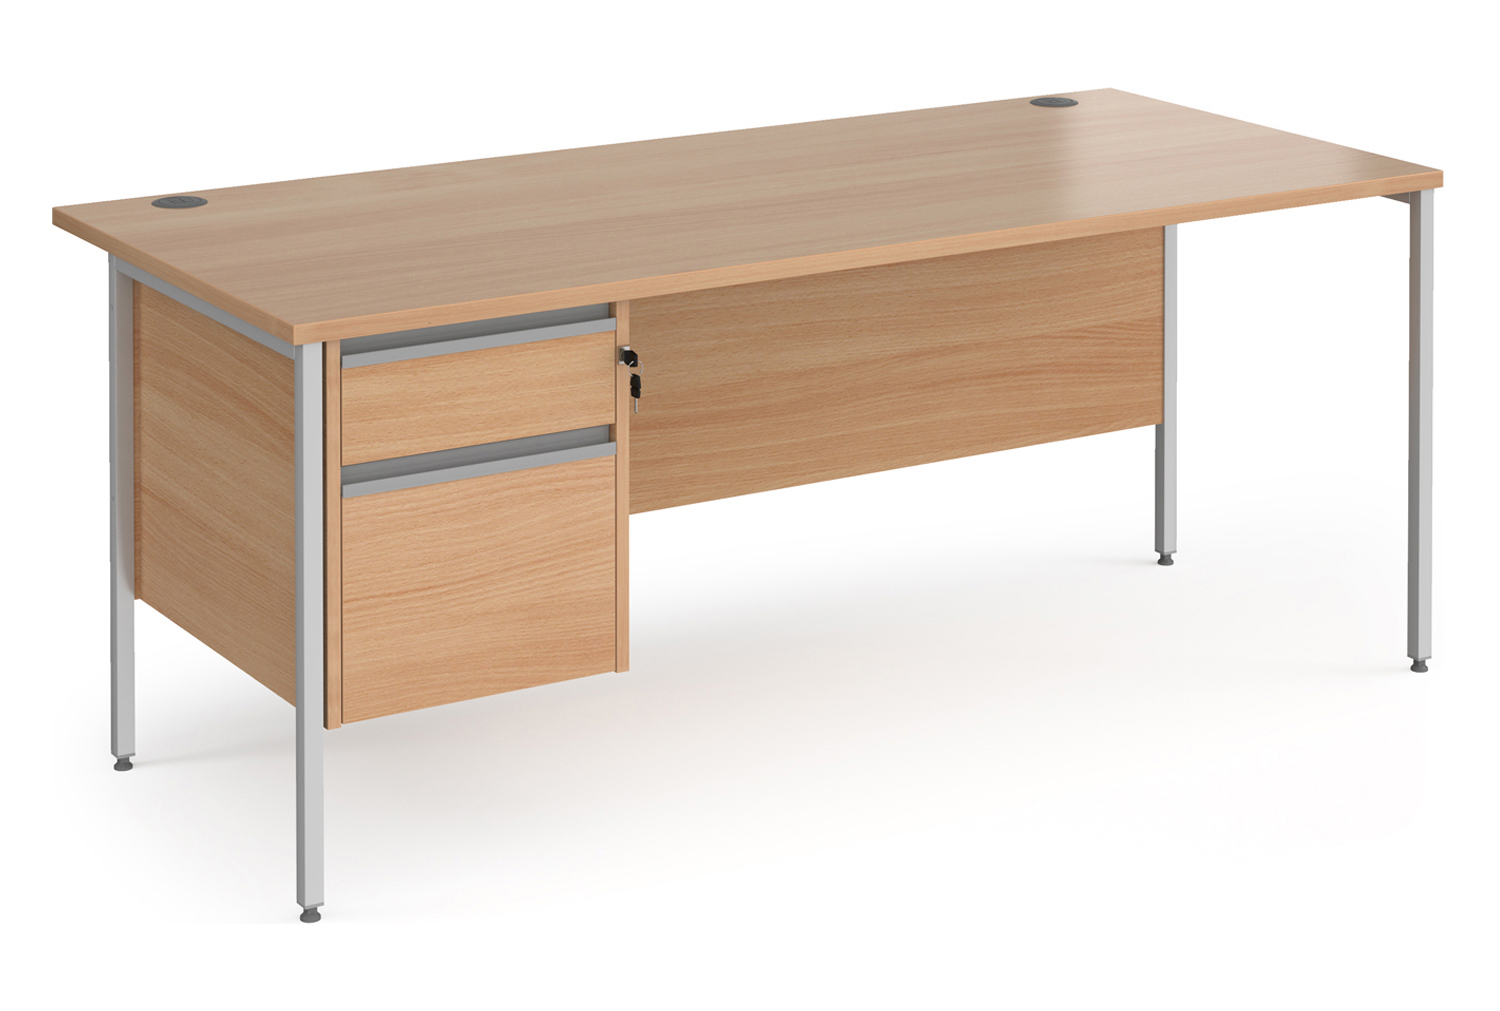 Value Line Classic+ Rectangular H-Leg Office Desk 2 Drawers (Silver Leg), 180wx80dx73h (cm), Beech